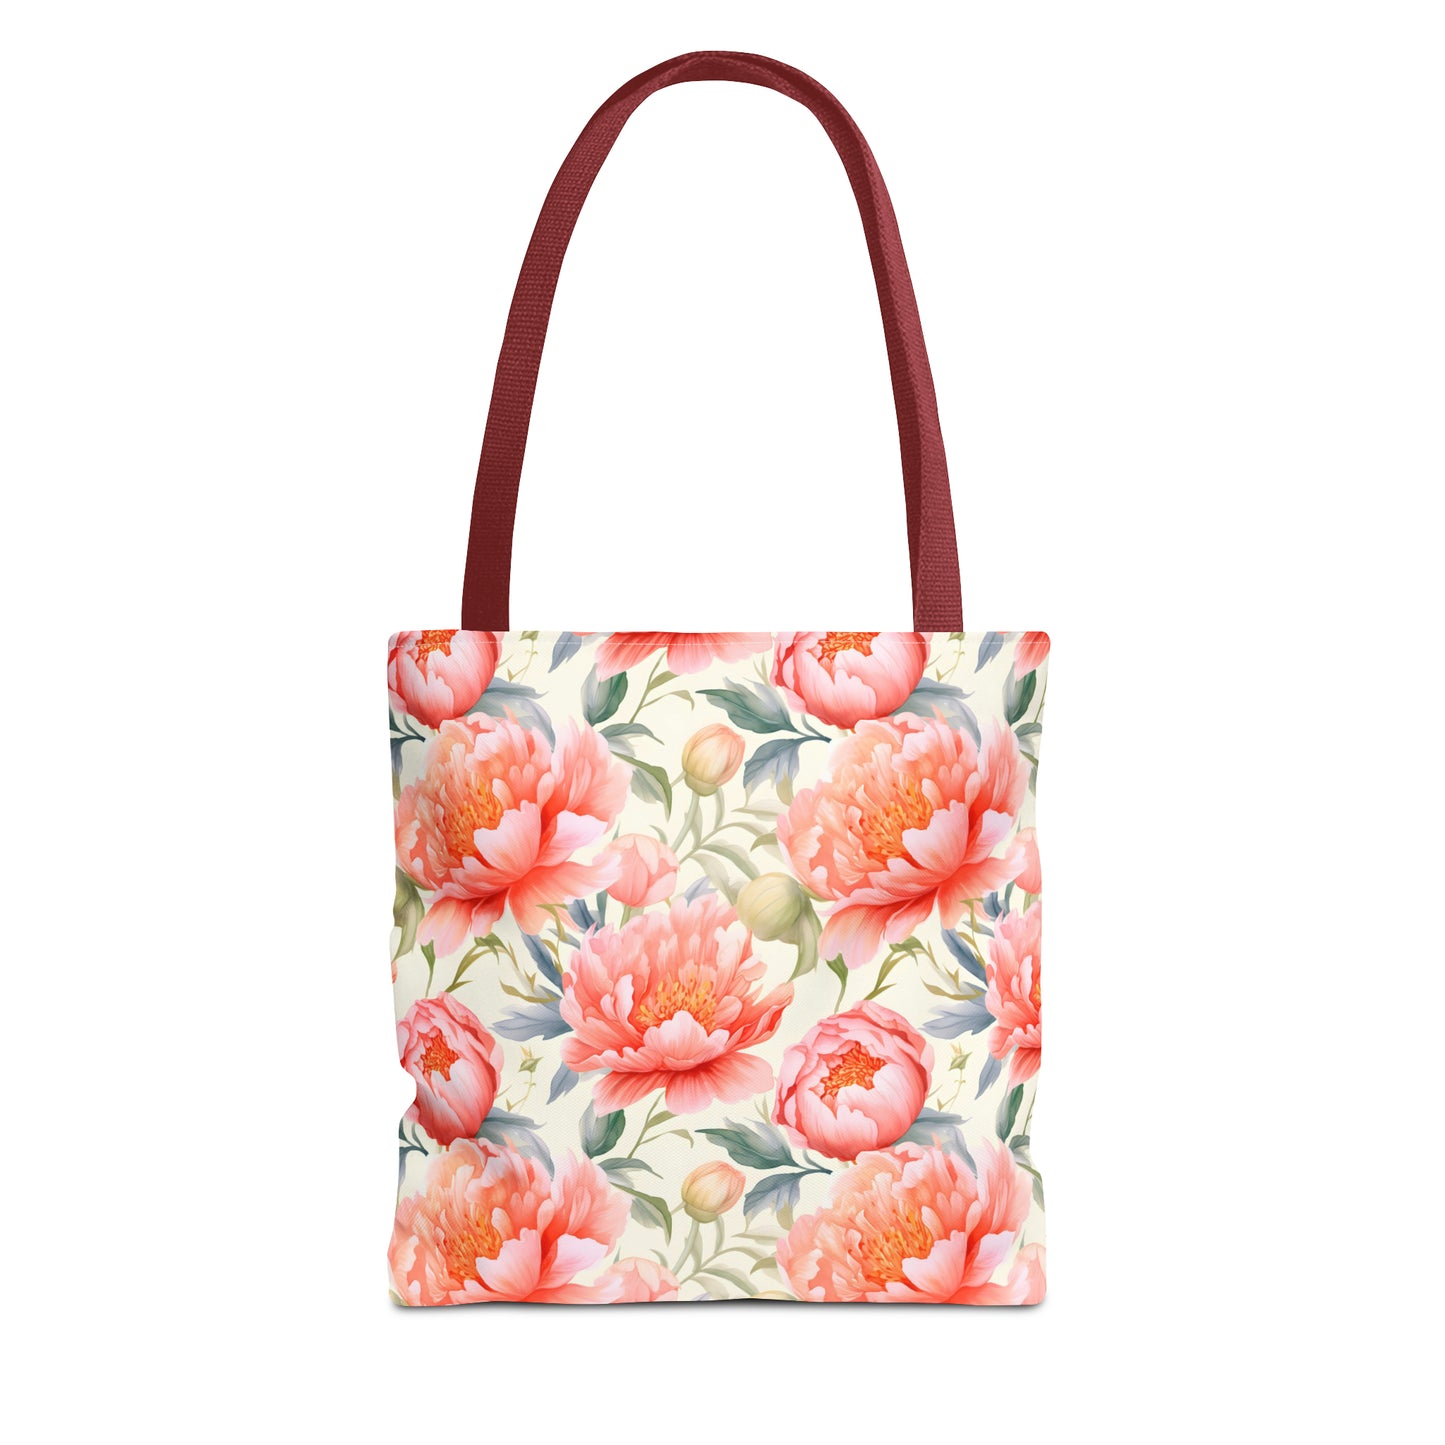 Pastel Blooms Peony Tote Bag (13" x 13")